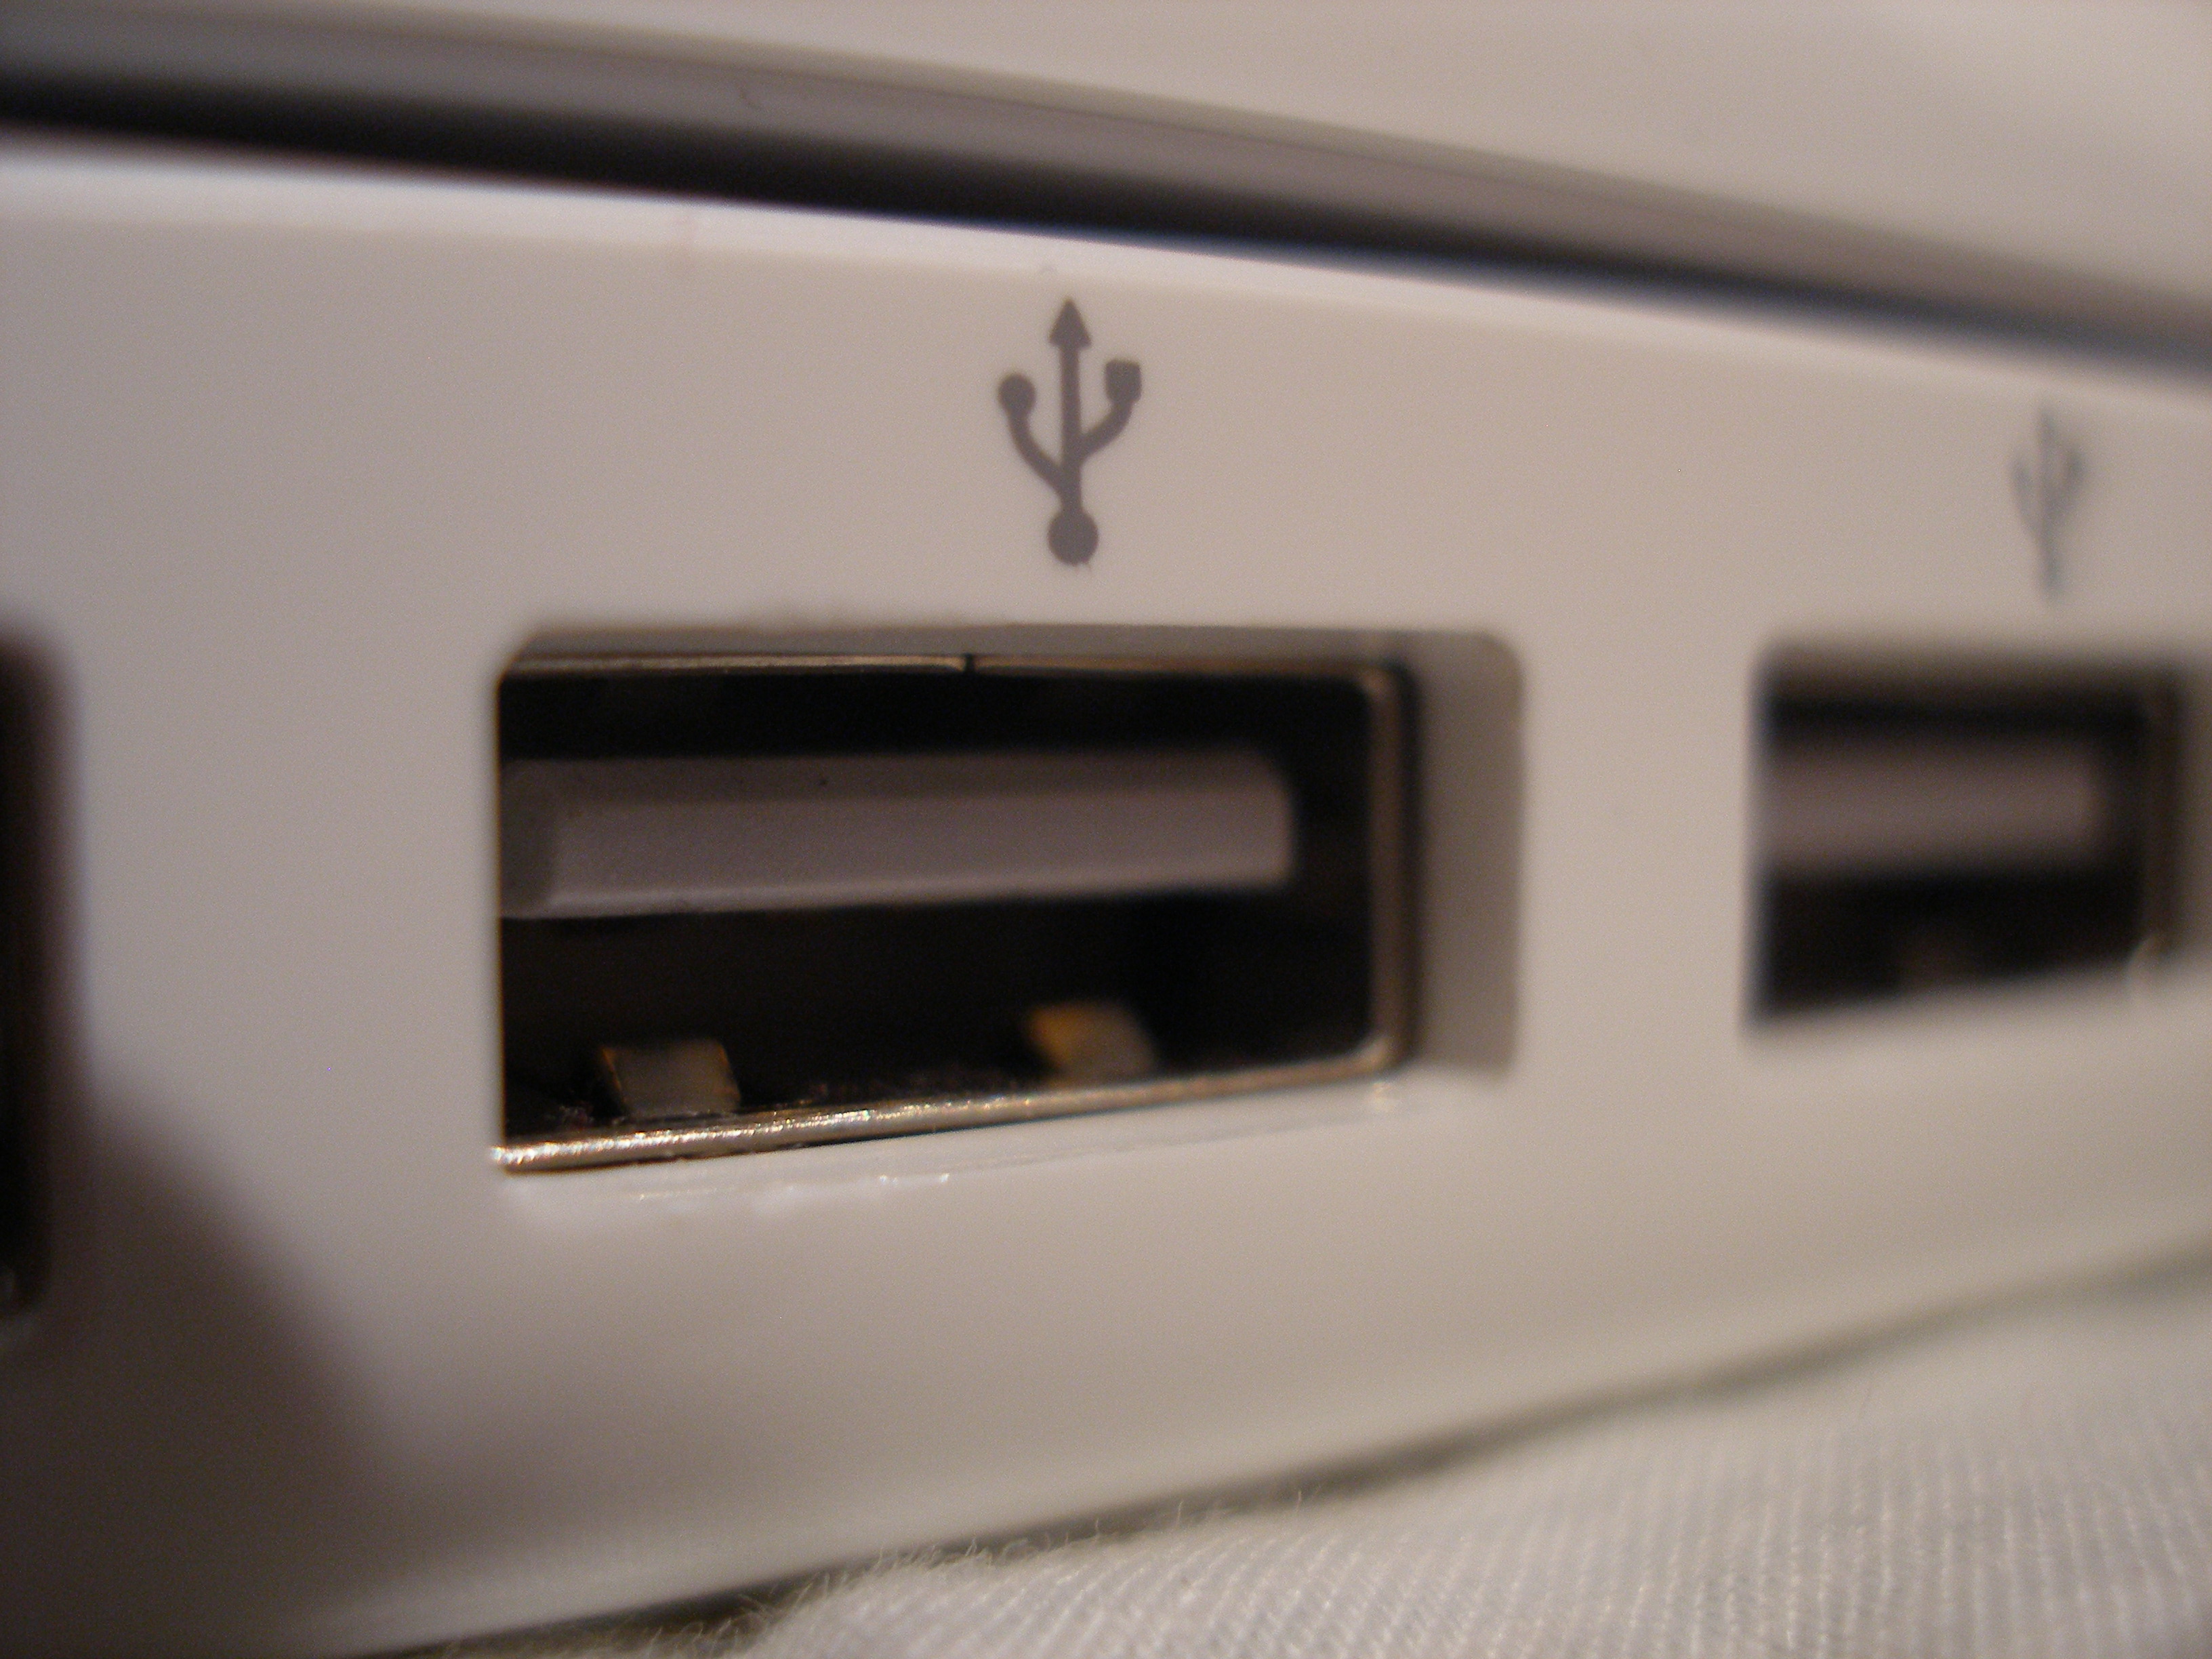 USB port image